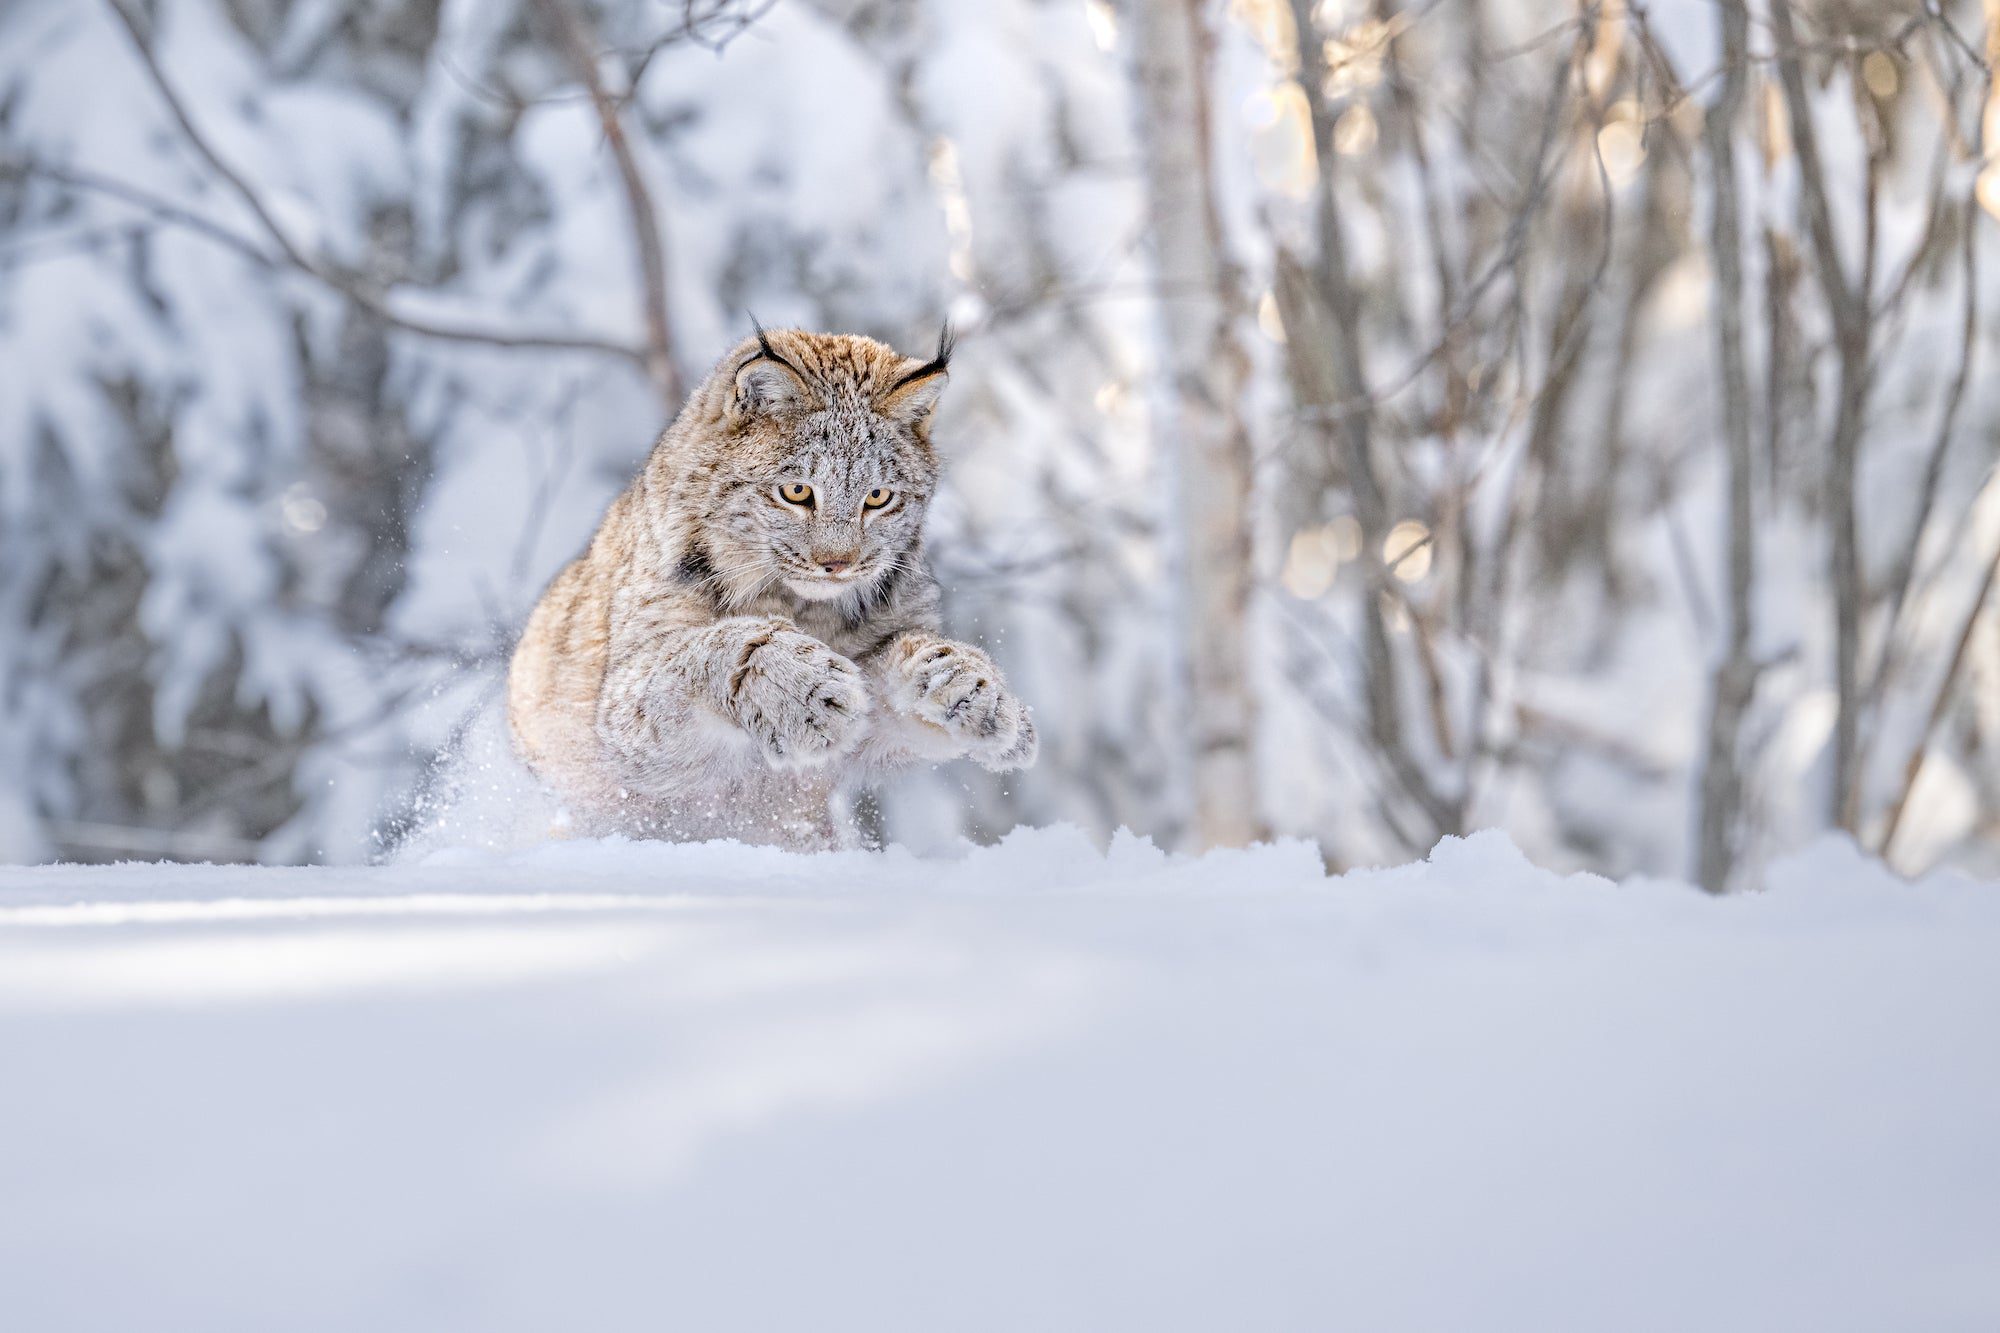 a lynx jumping through the snow